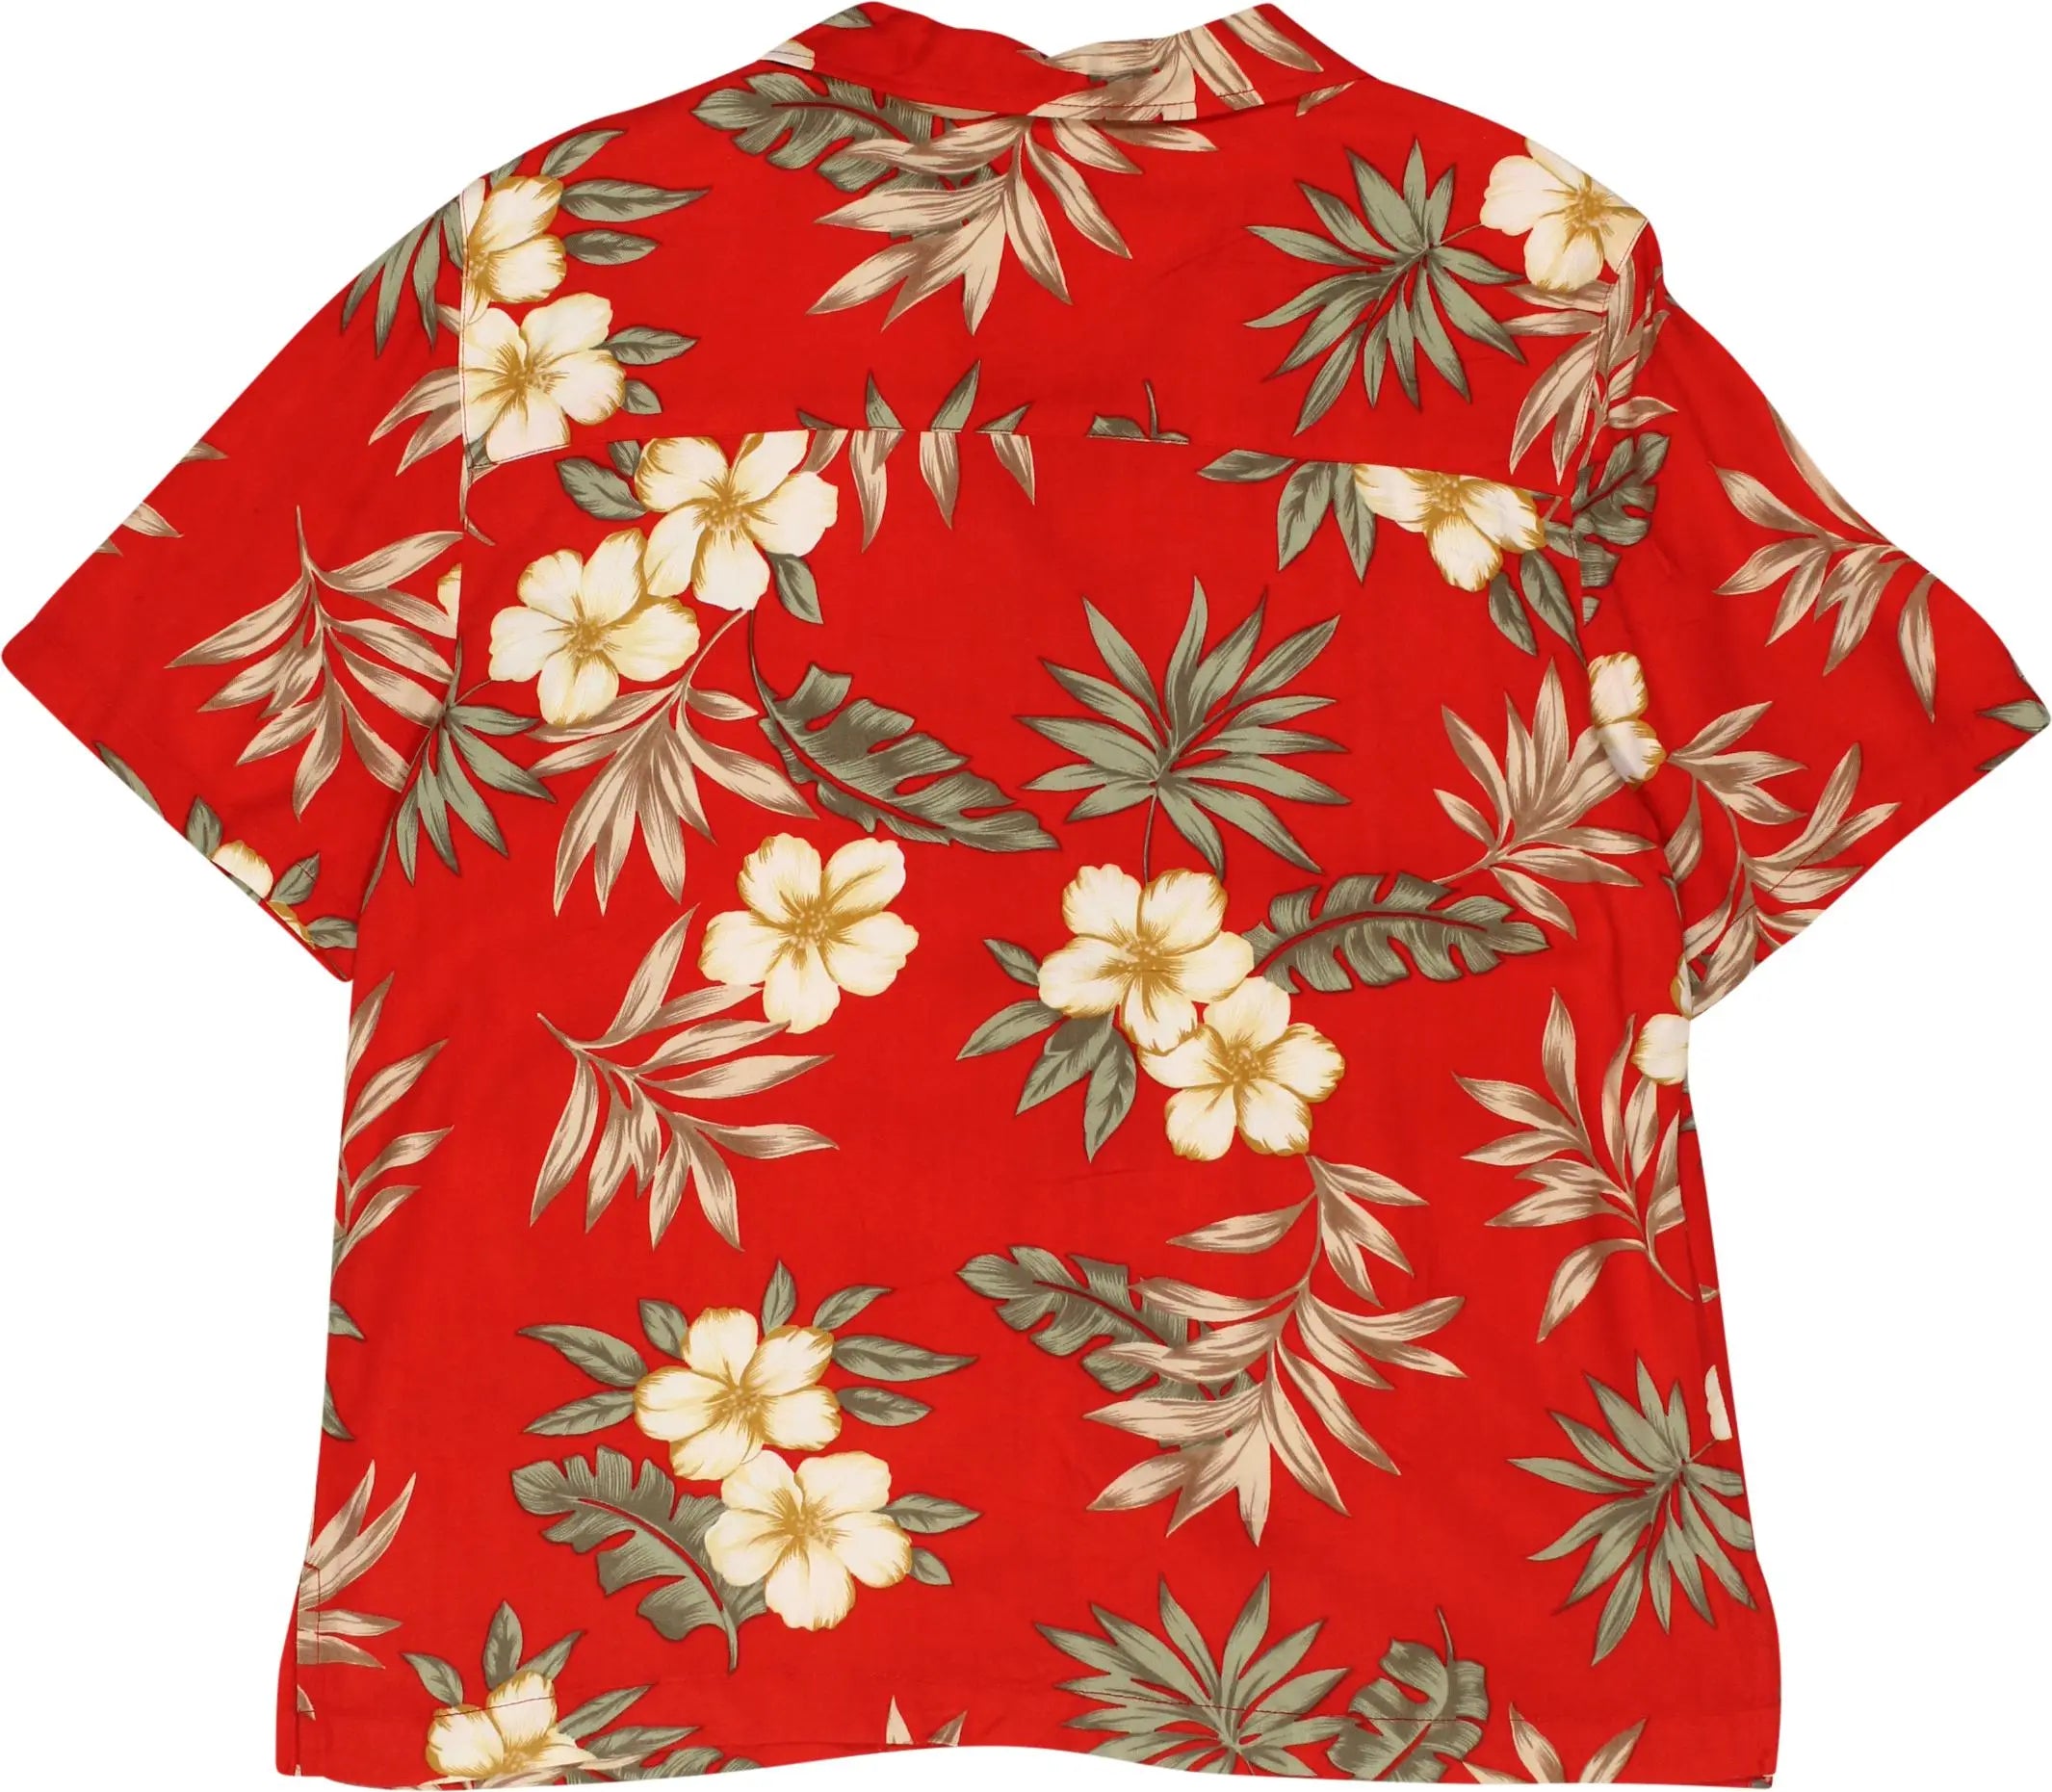 Tahiti Reef Club - Hawaiian Shirt- ThriftTale.com - Vintage and second handclothing